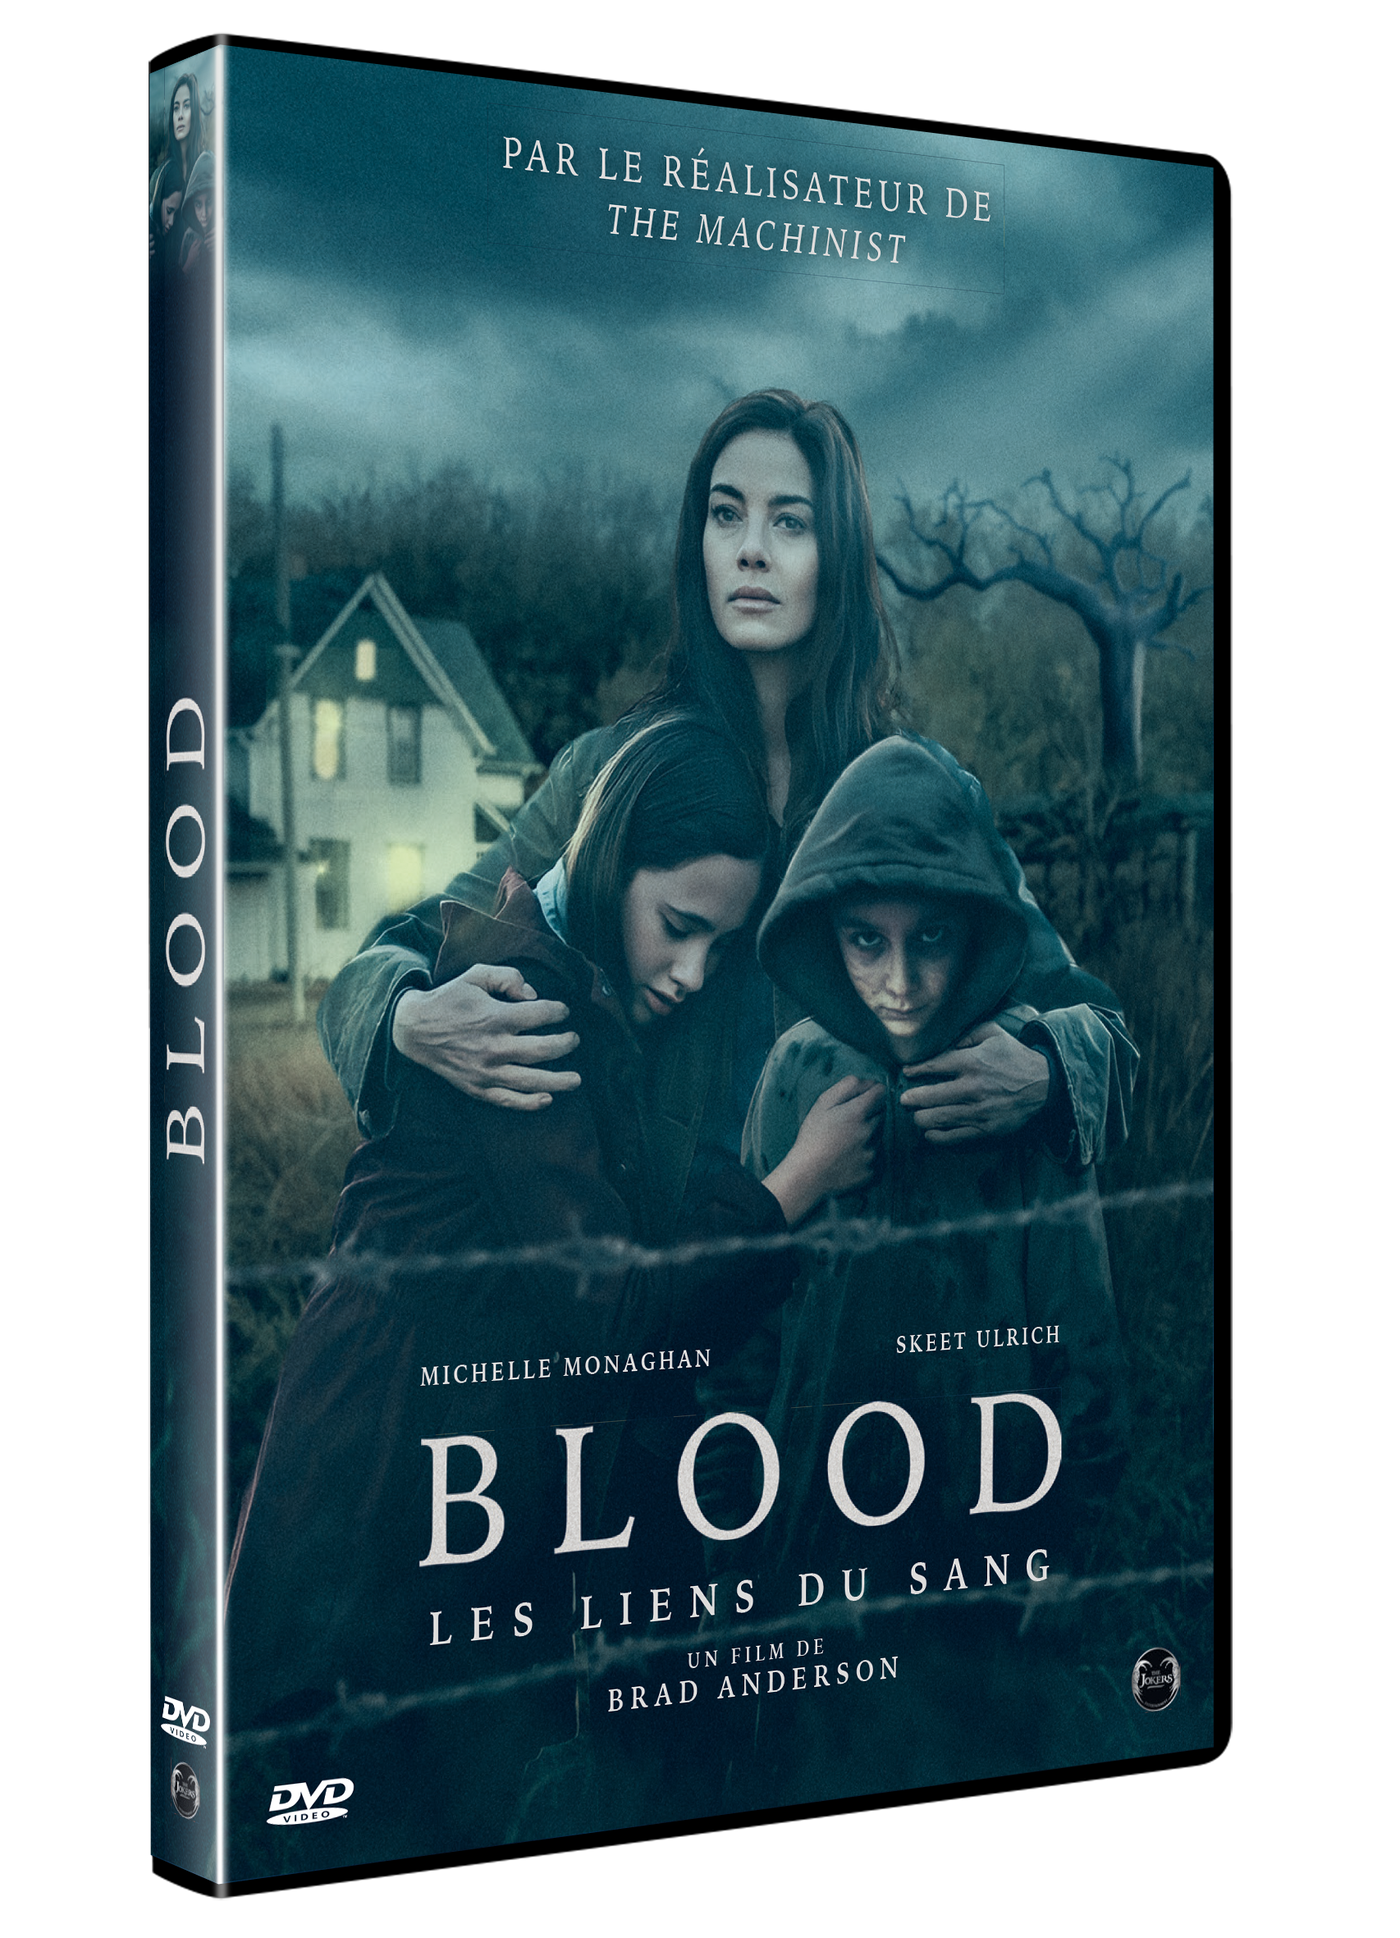 DVD "BLOOD"